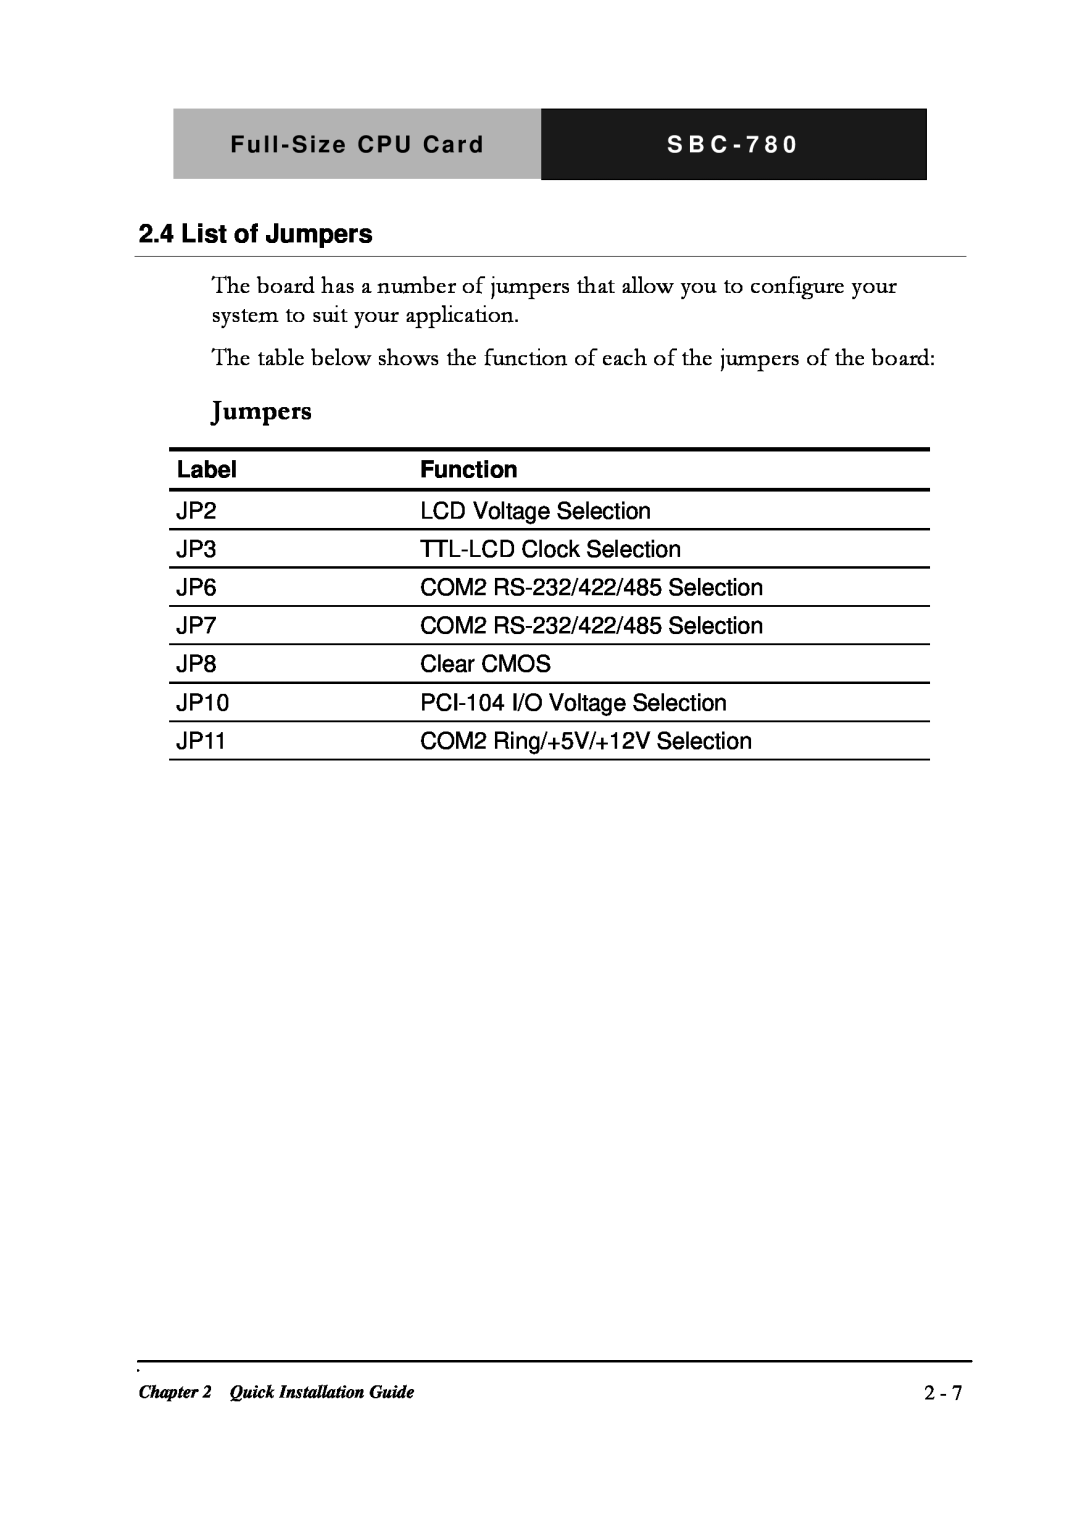 Intel SBC-780 manual List of Jumpers 